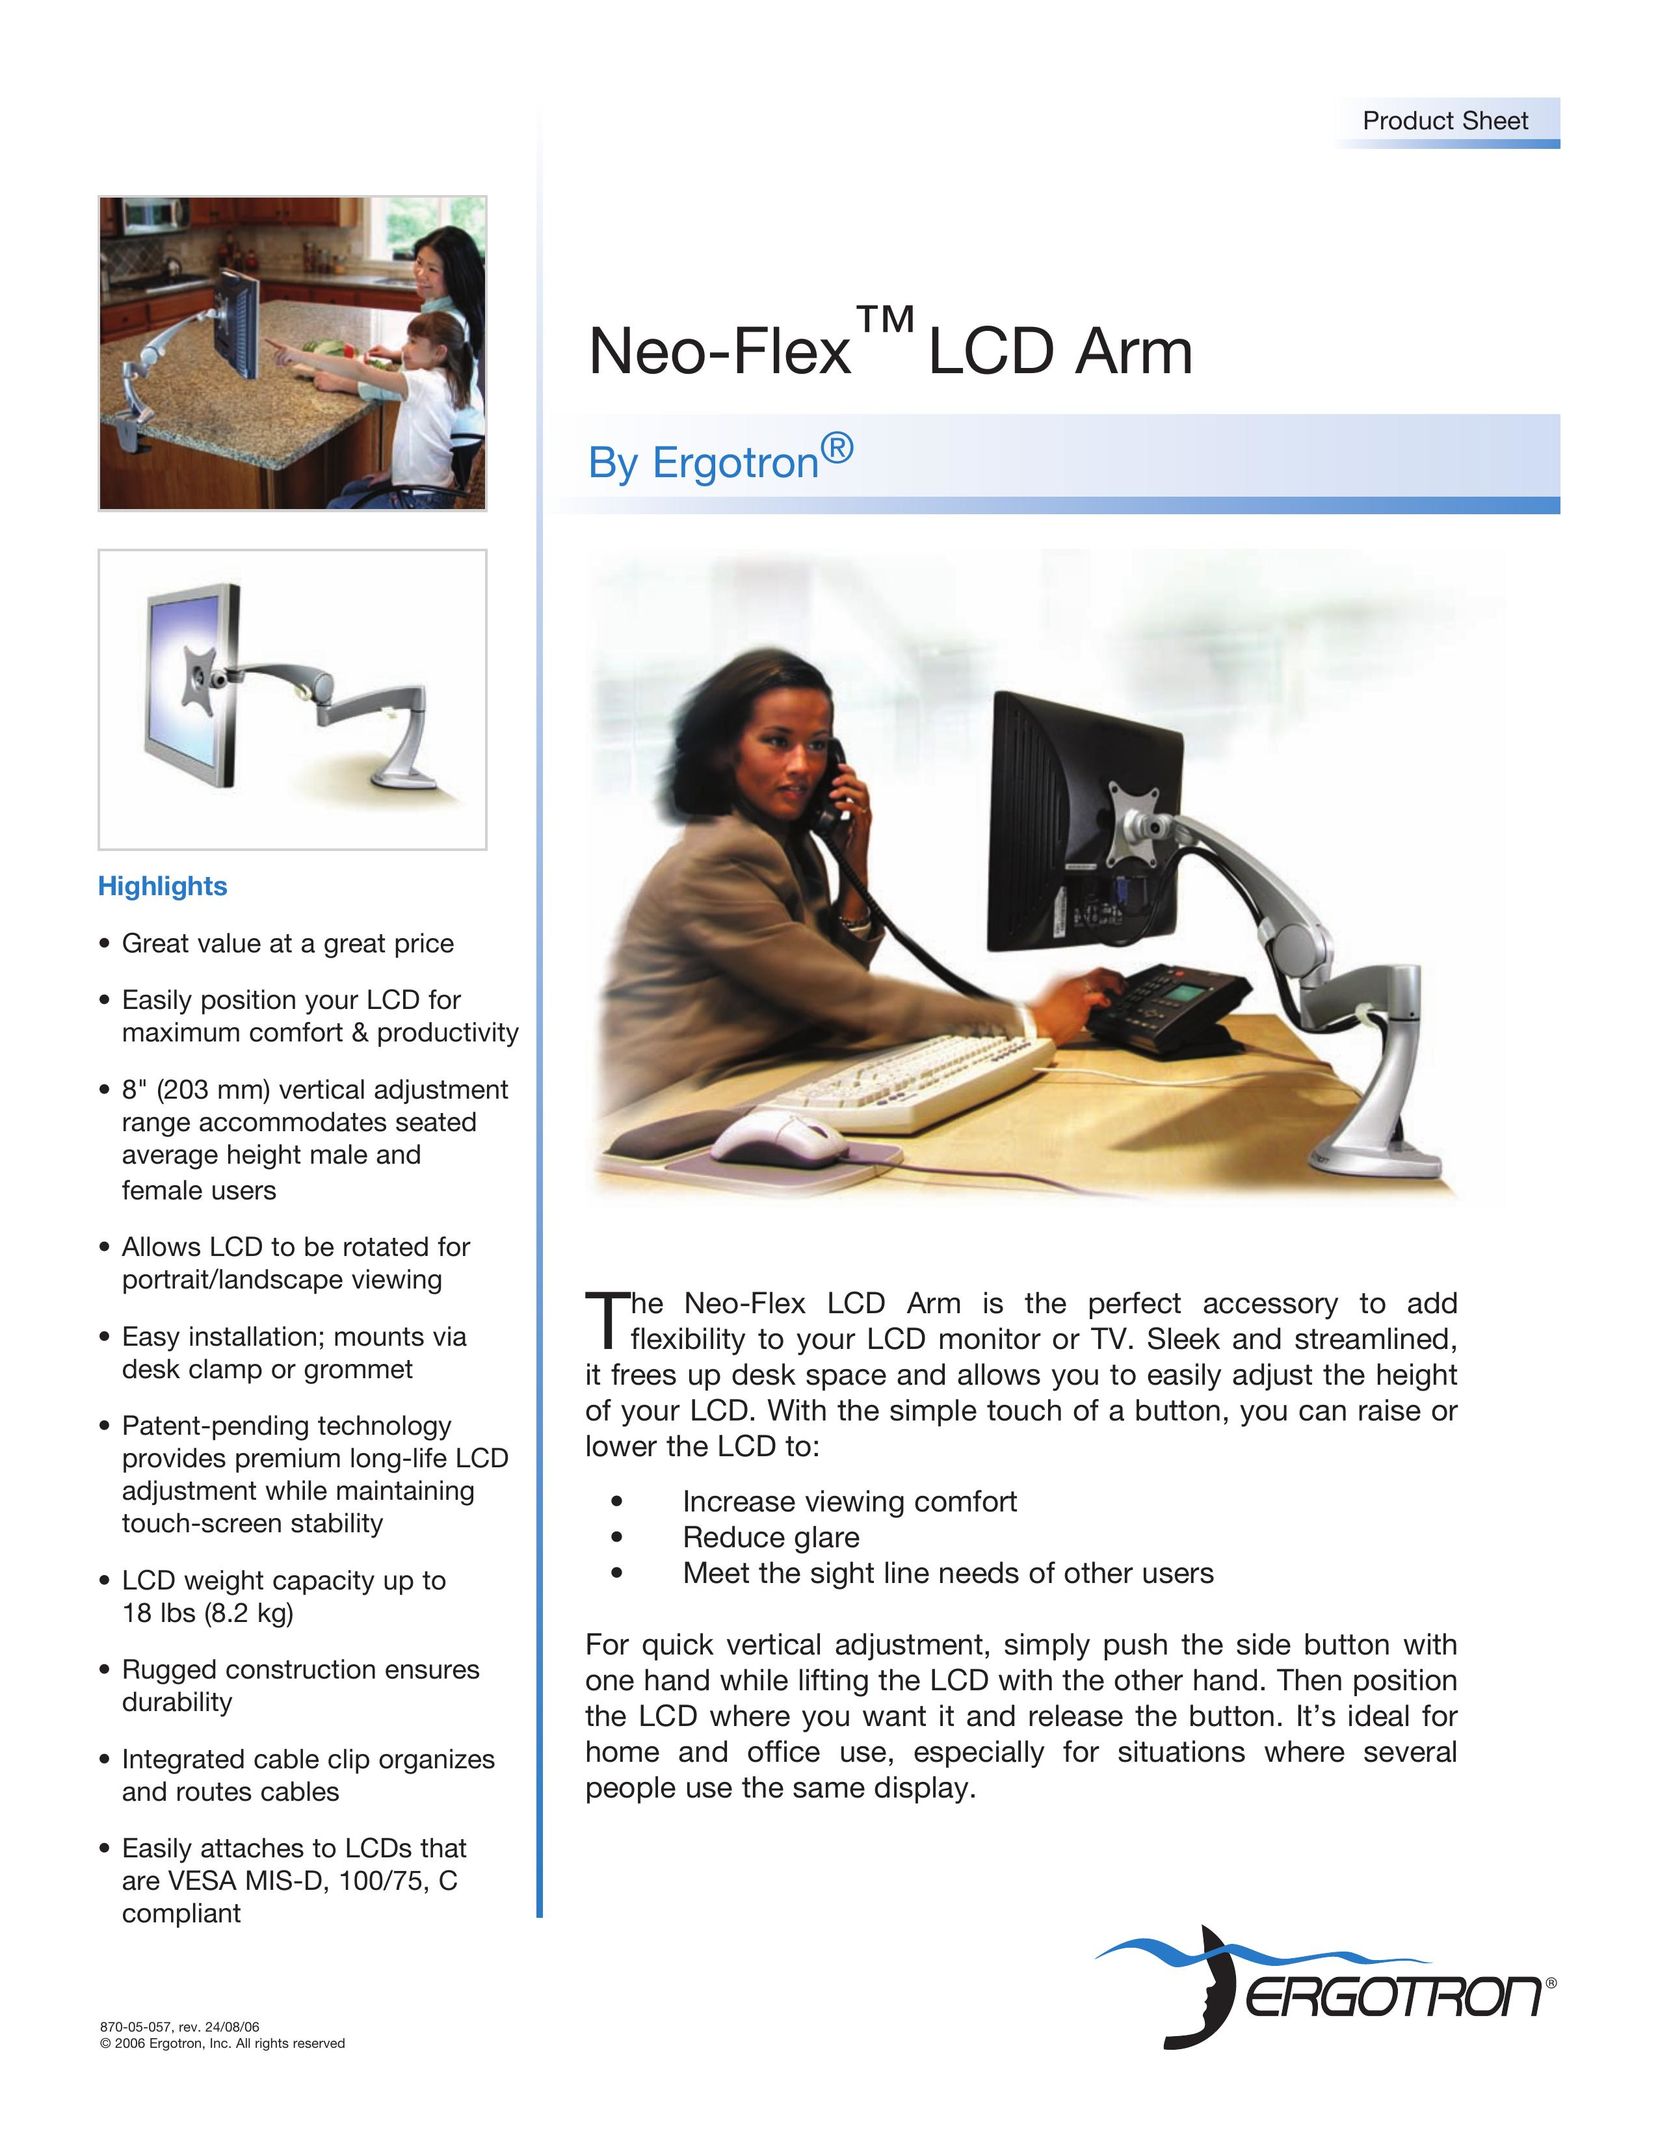 Ergotron LCD Arm Indoor Furnishings User Manual